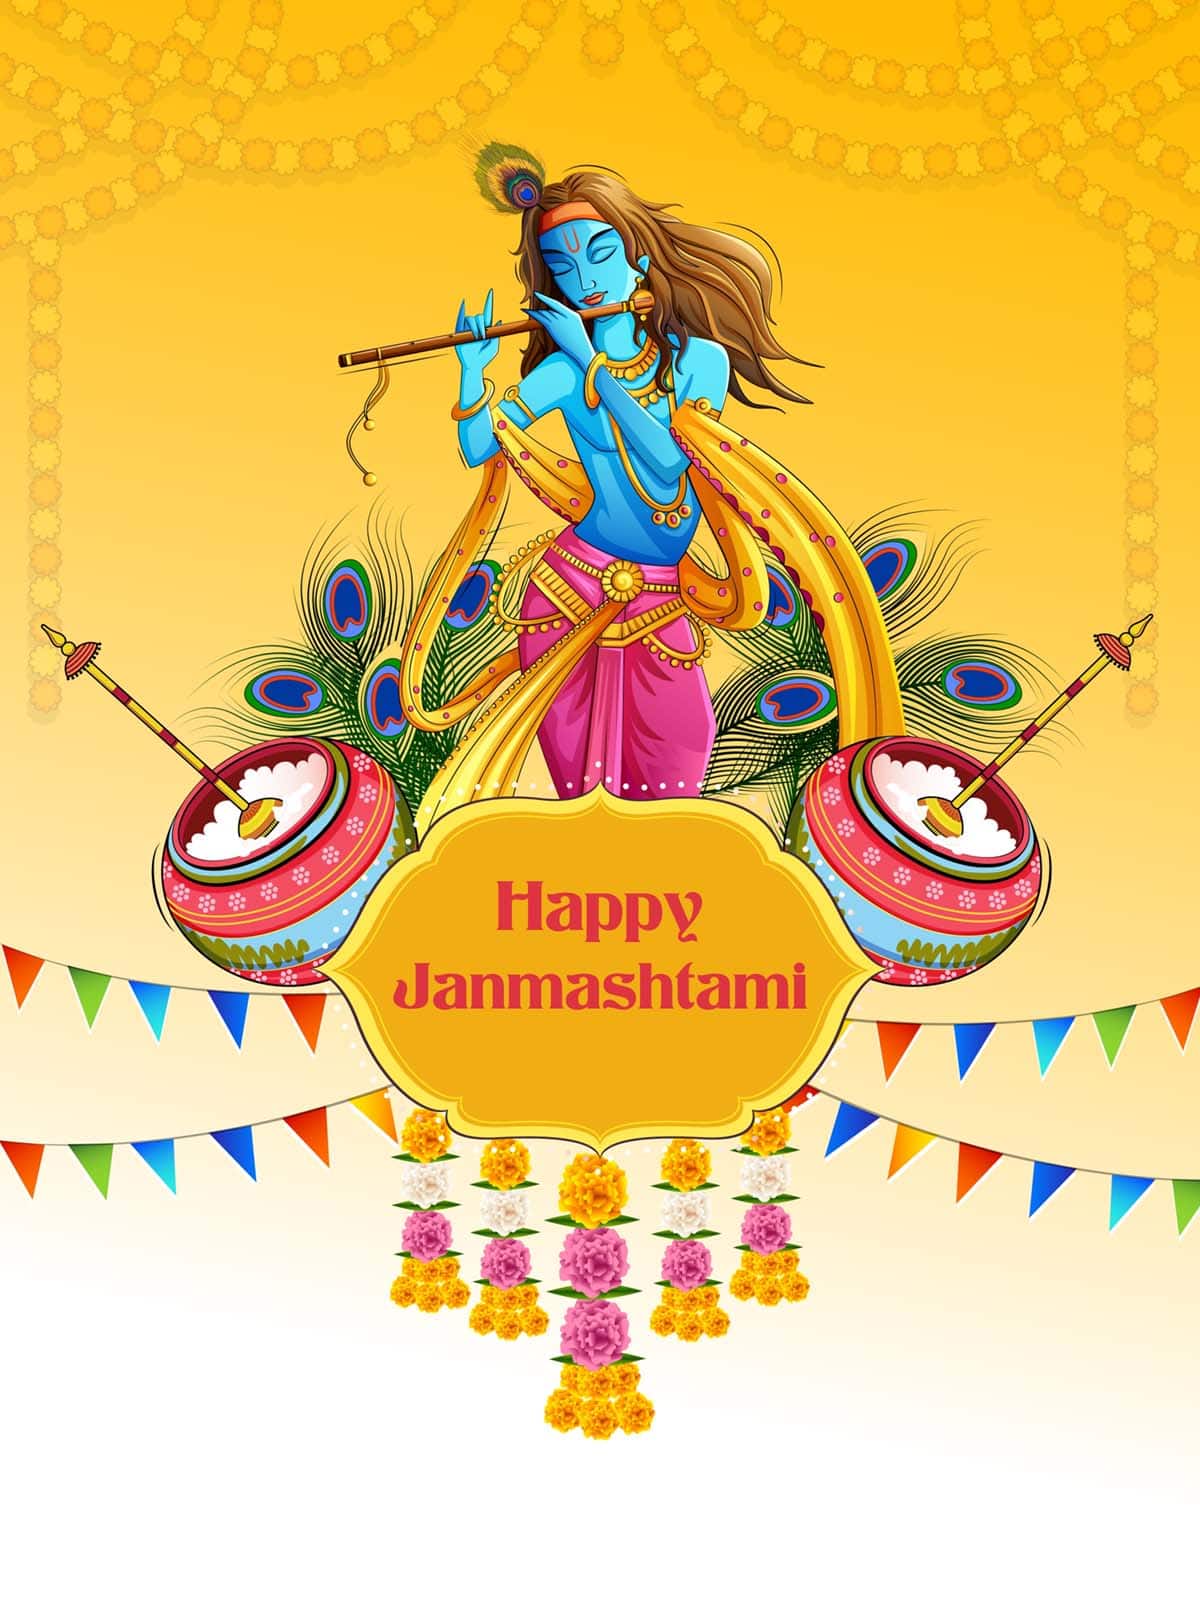 vector image of Bhagwan Krishna playing flute on Janmashtami festive background with text layovers